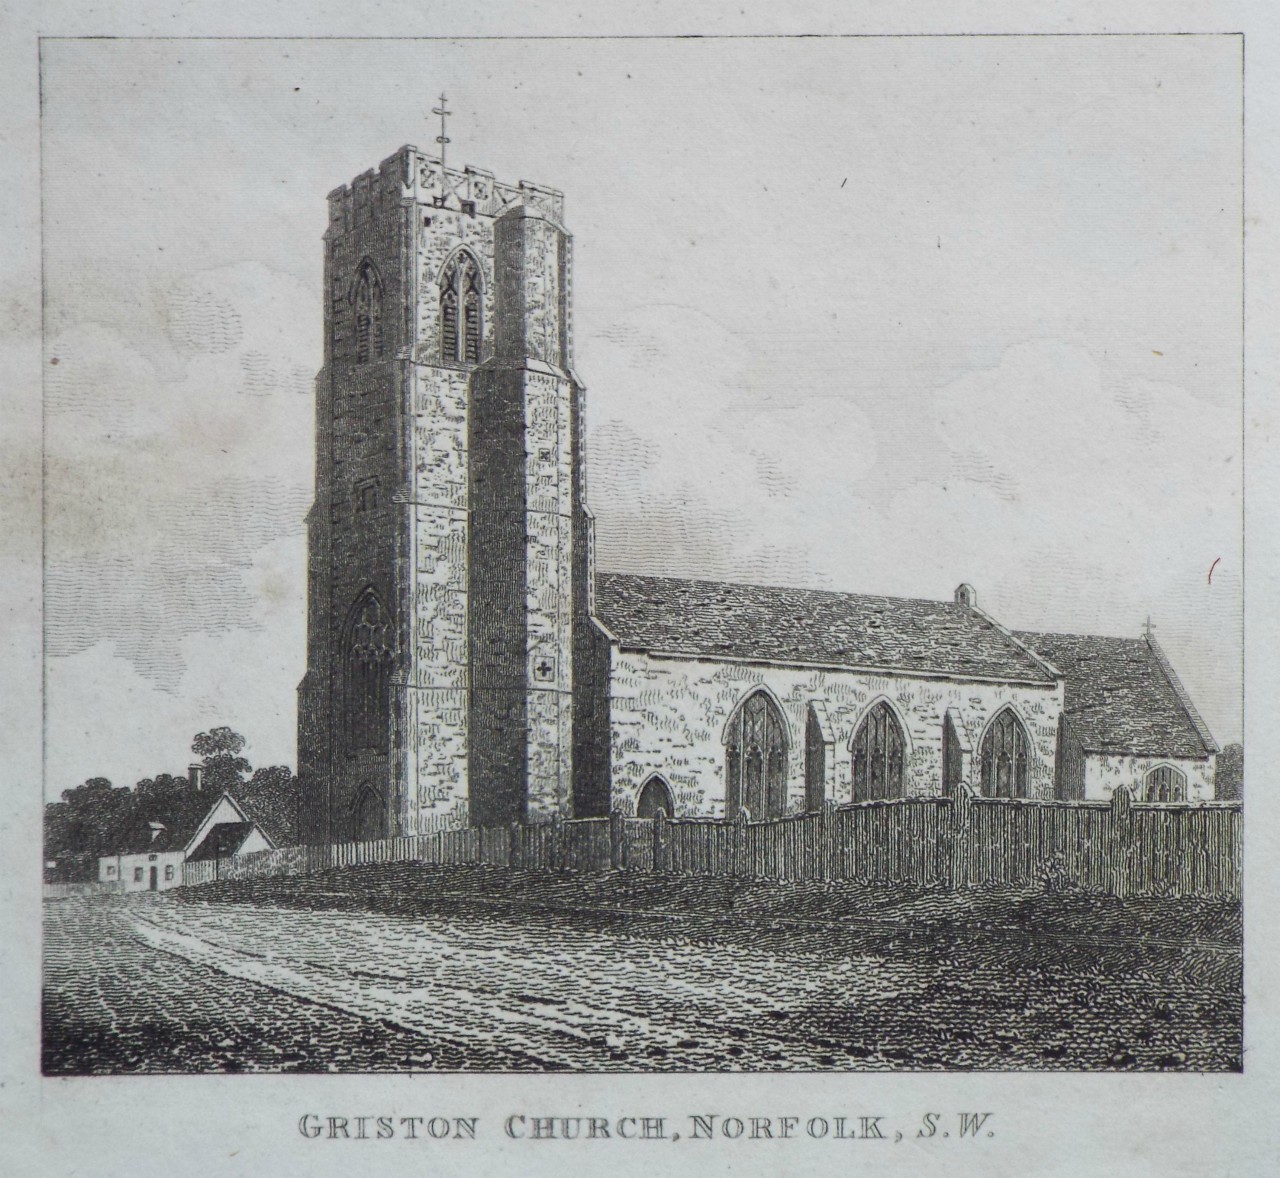 Print - Griston Church, Norfolk, S.W.